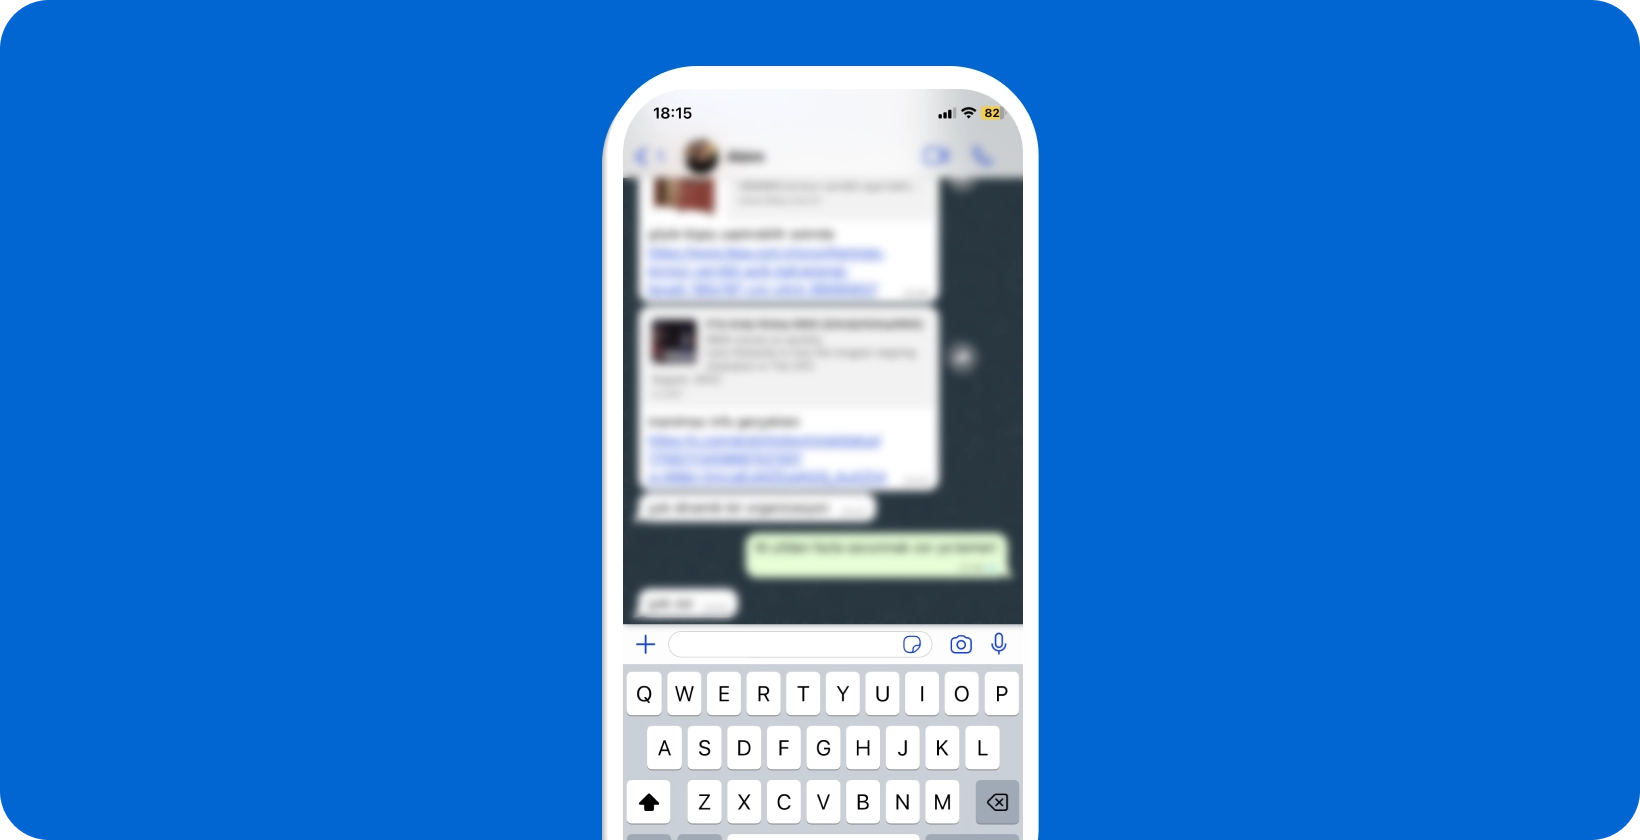 Smartphone που εμφανίζει μια ενεργή συνομιλία WhatsApp με το πληκτρολόγιο ανοιχτό, έτοιμο για φωνητική υπαγόρευση.